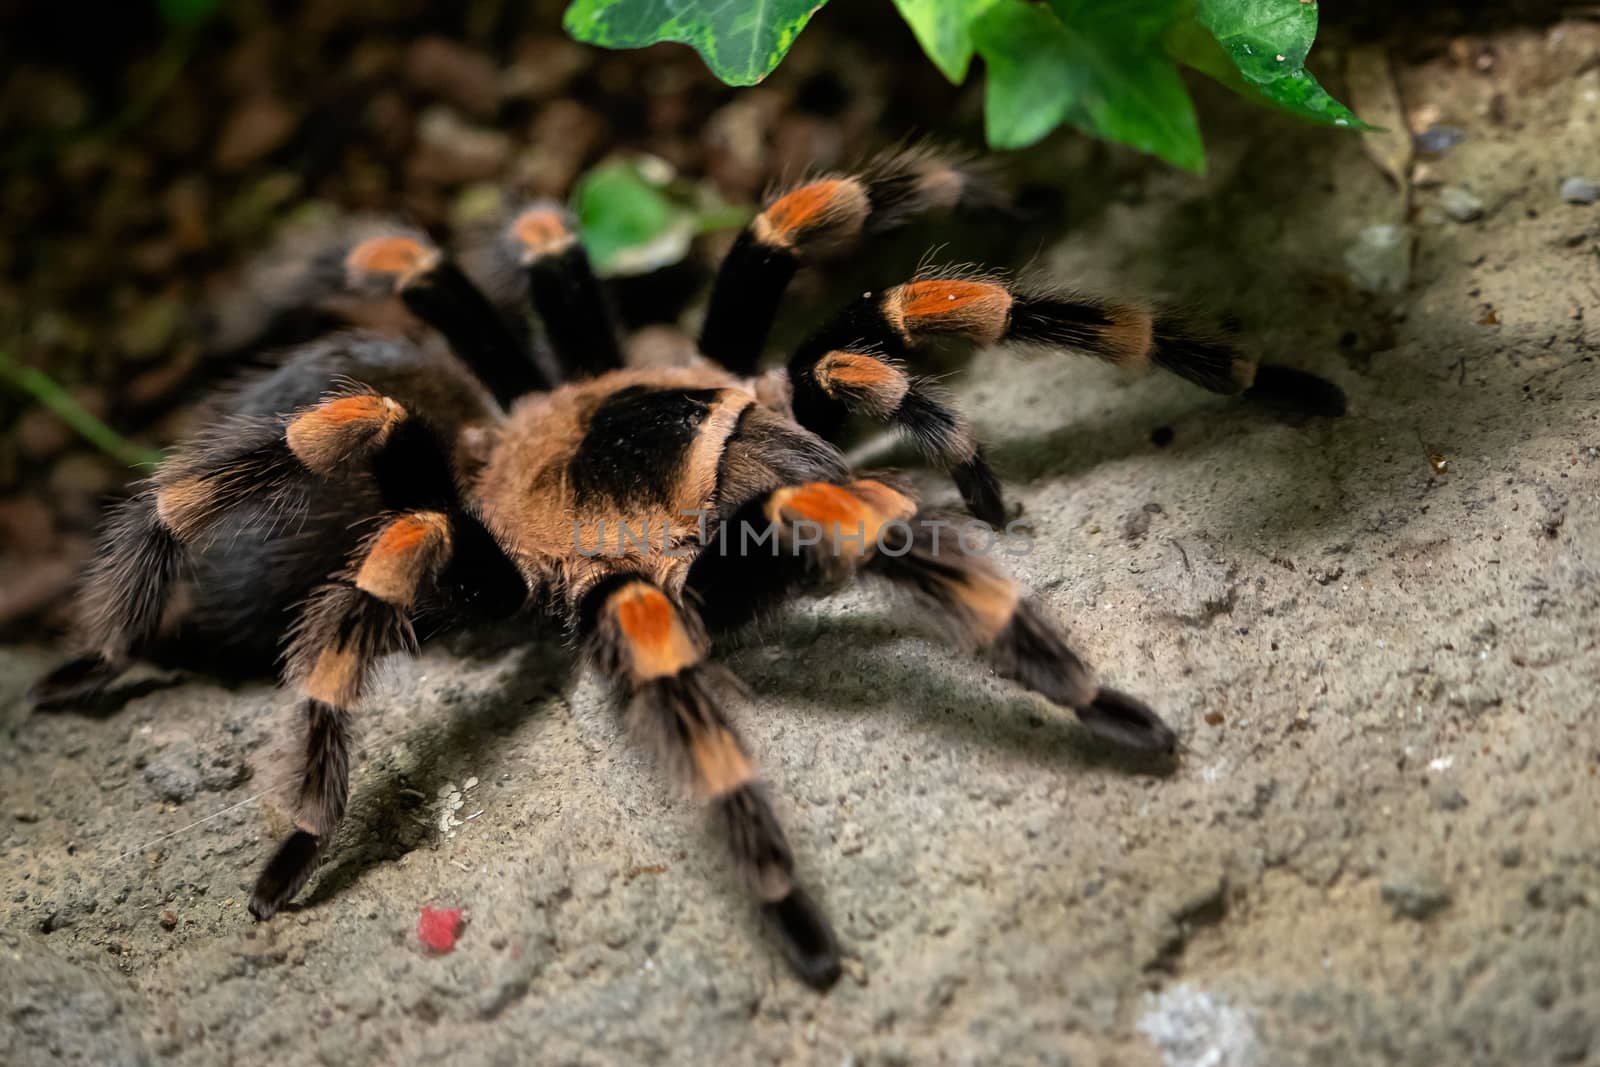 Tarantula spider close-up. Spider (Brachypelma smithi) by xtrekx